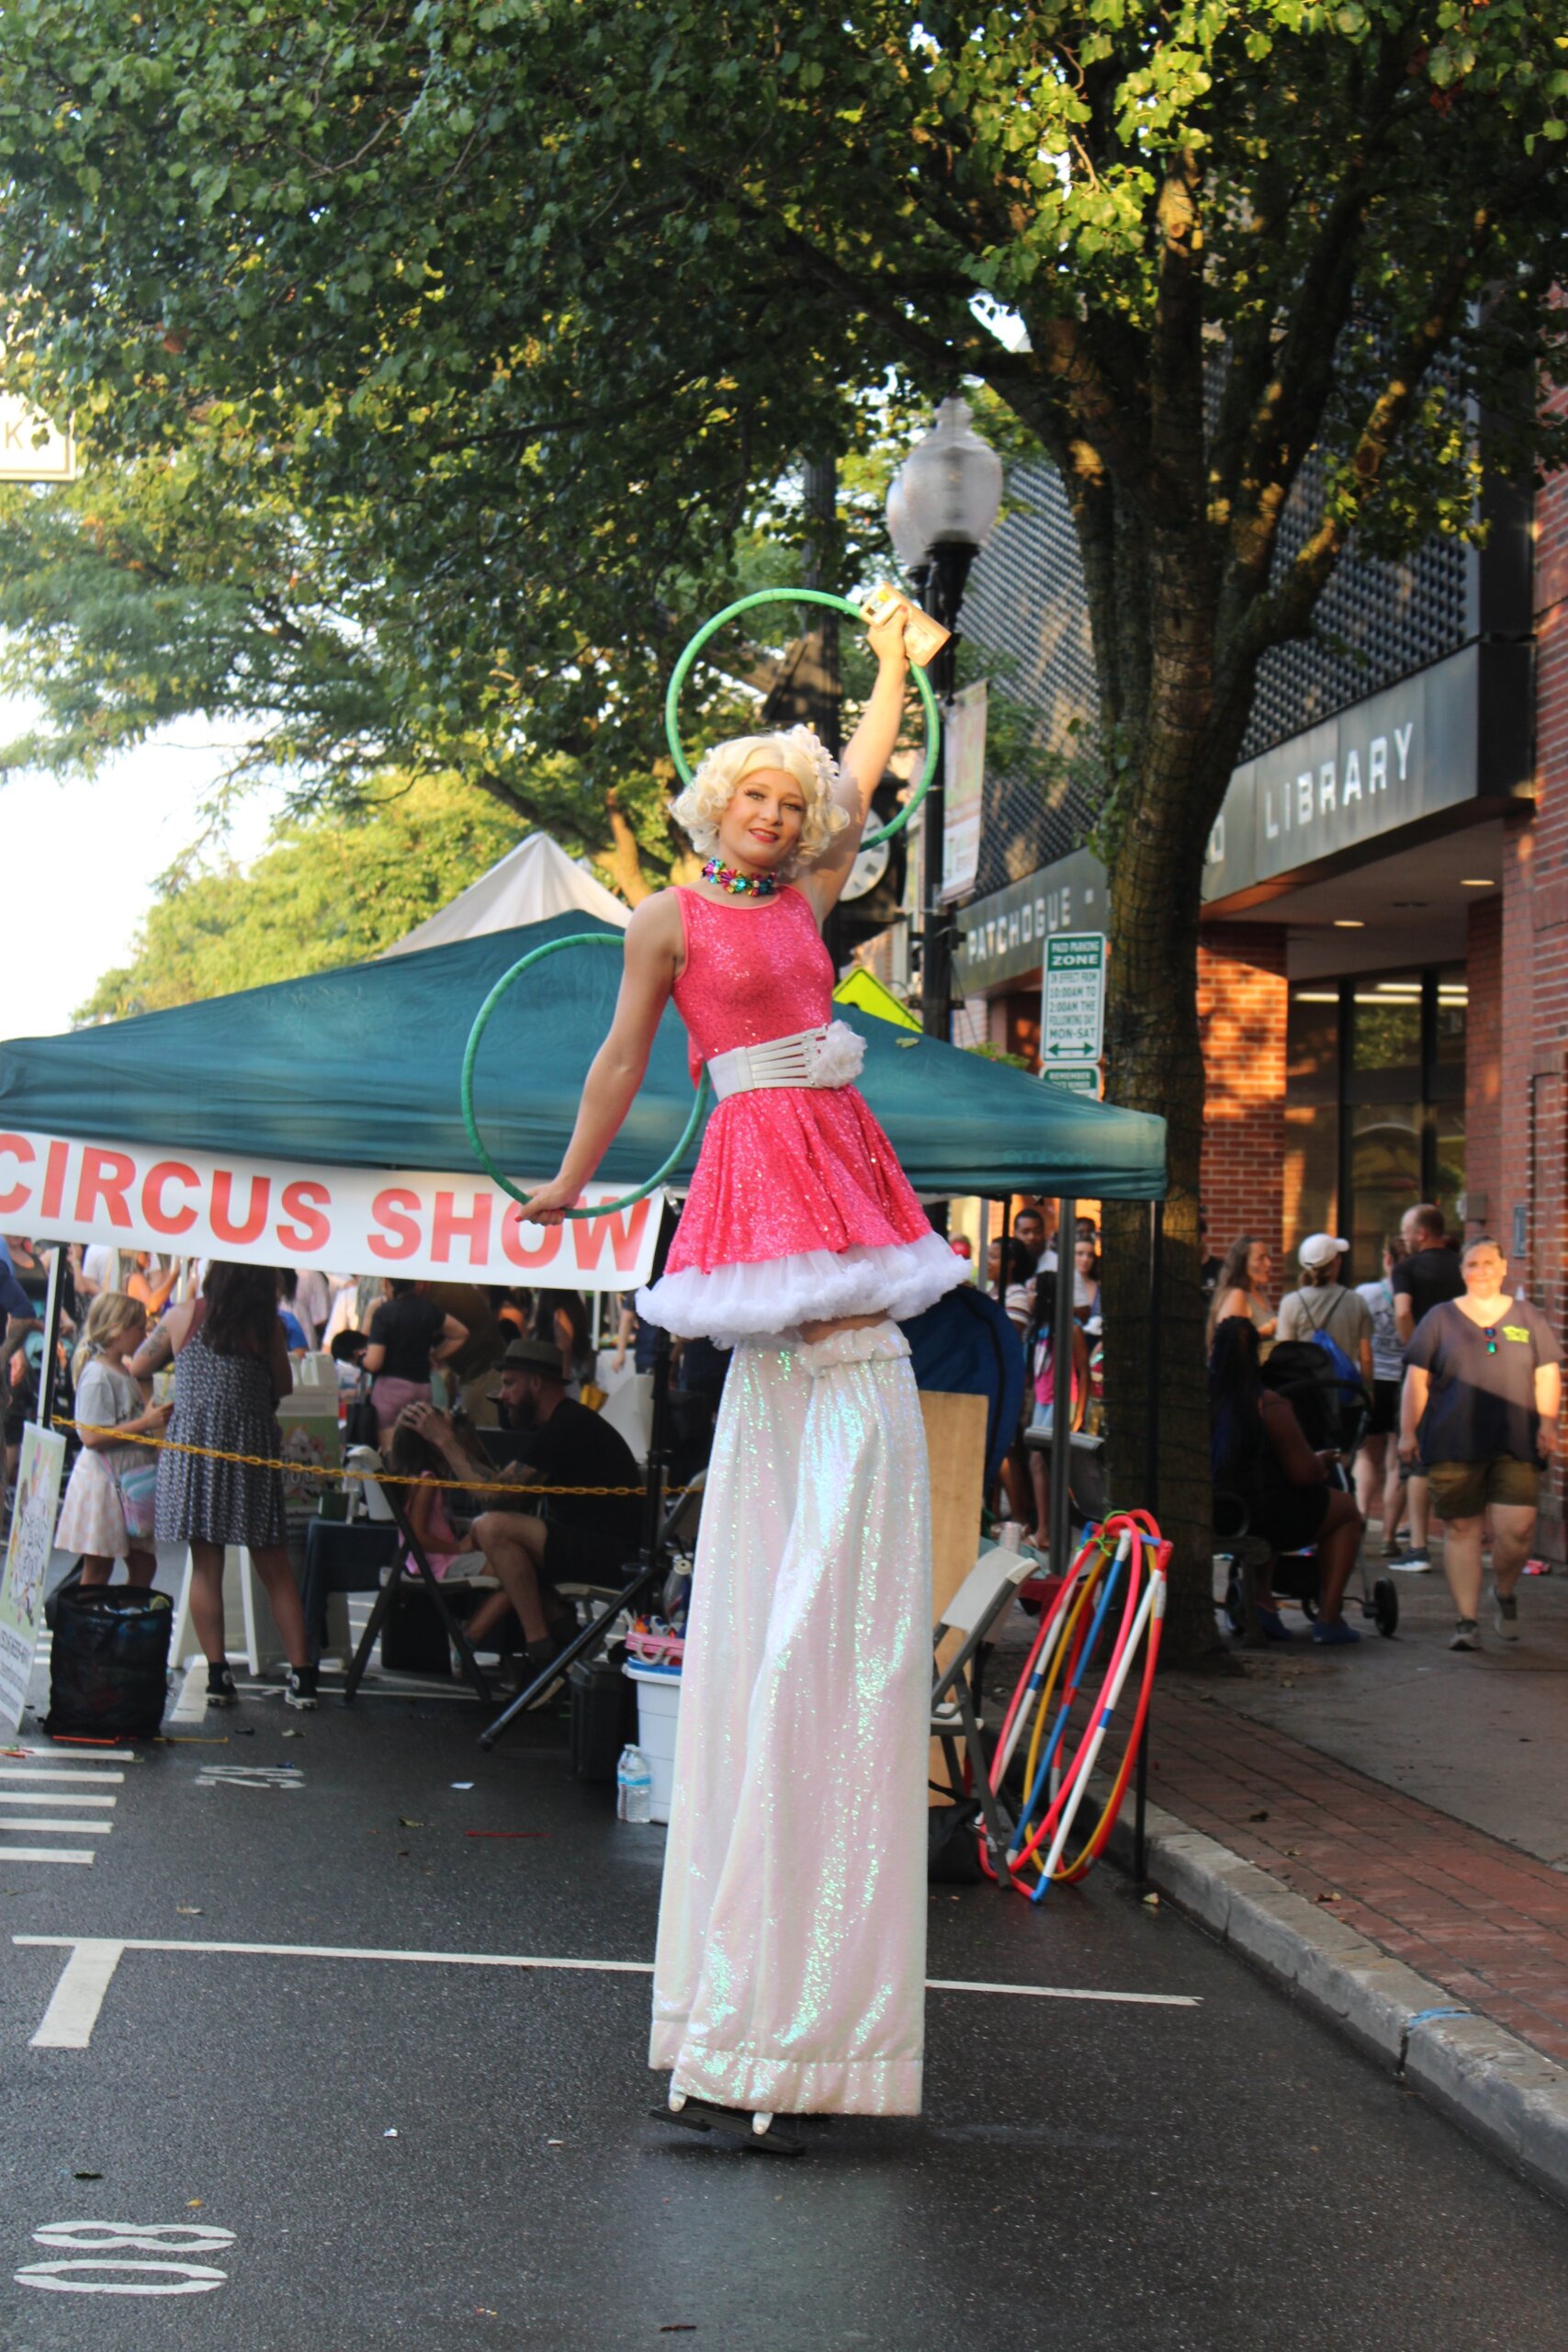 Woman on stilts!